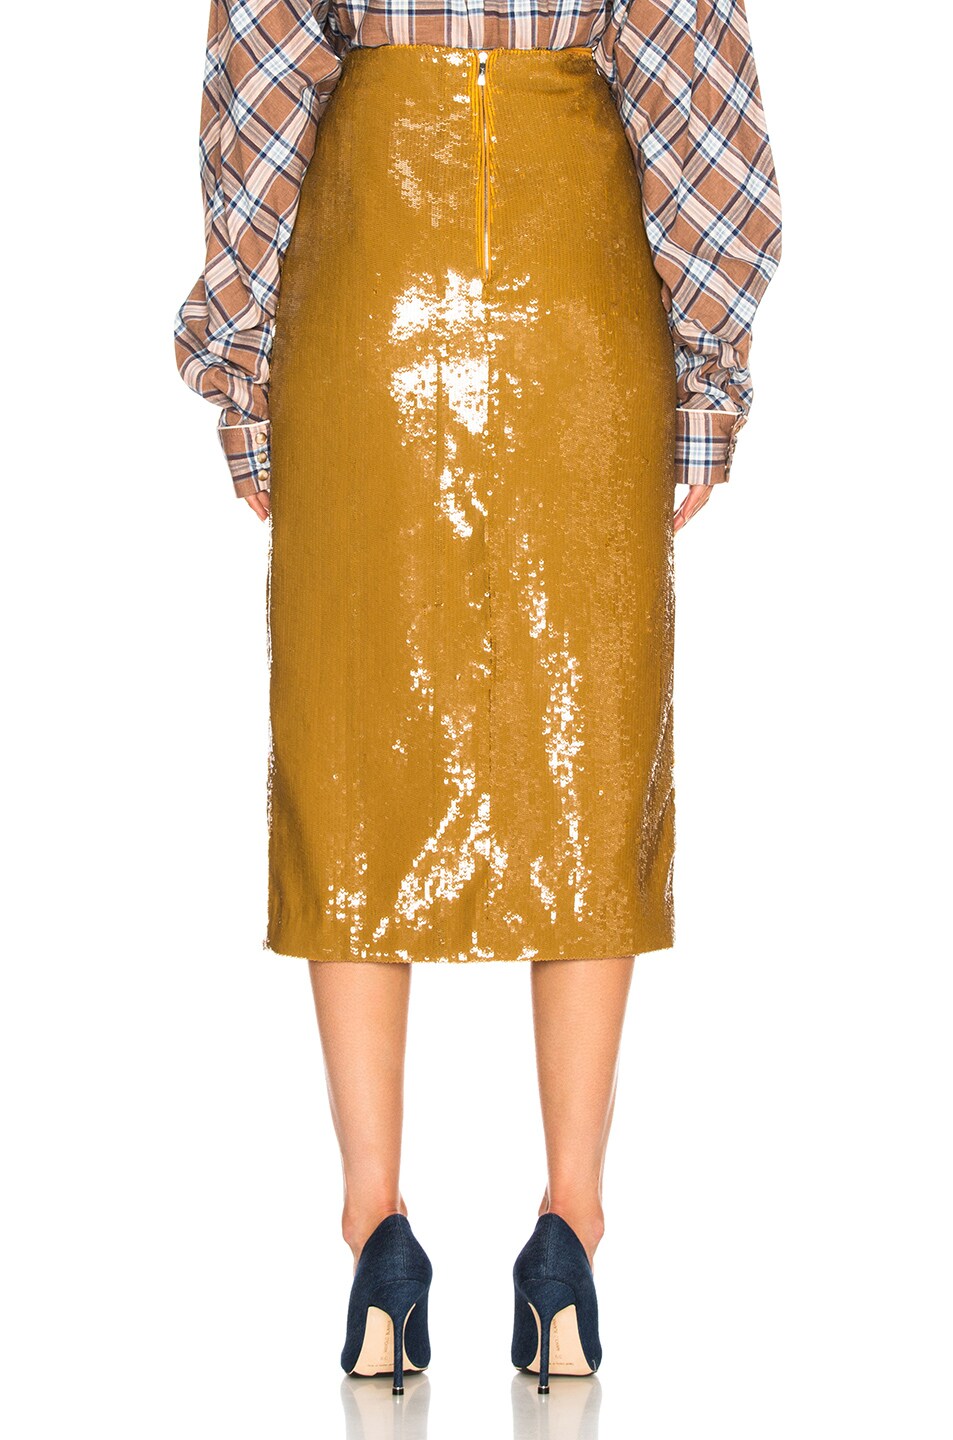 Johanna Ortiz Frutilla Skirt in Marigold | FWRD